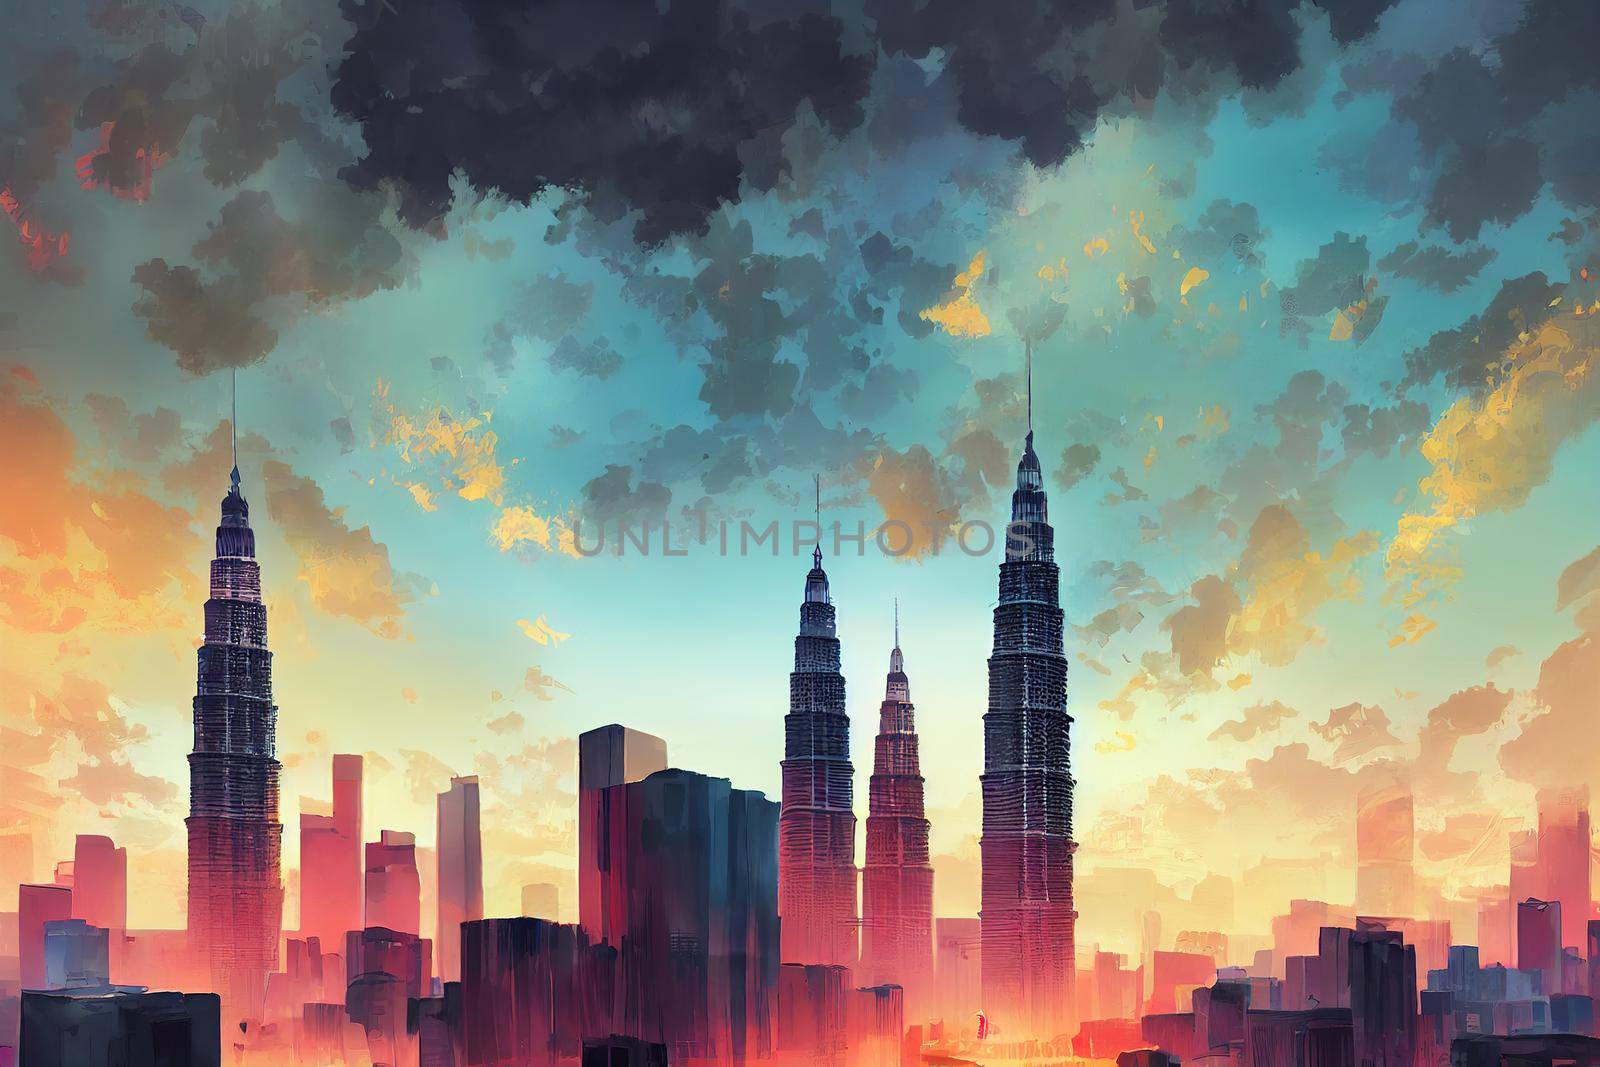 Kuala Lumpur abstract city 2d Anime illustration V2 High quality 2d illustration